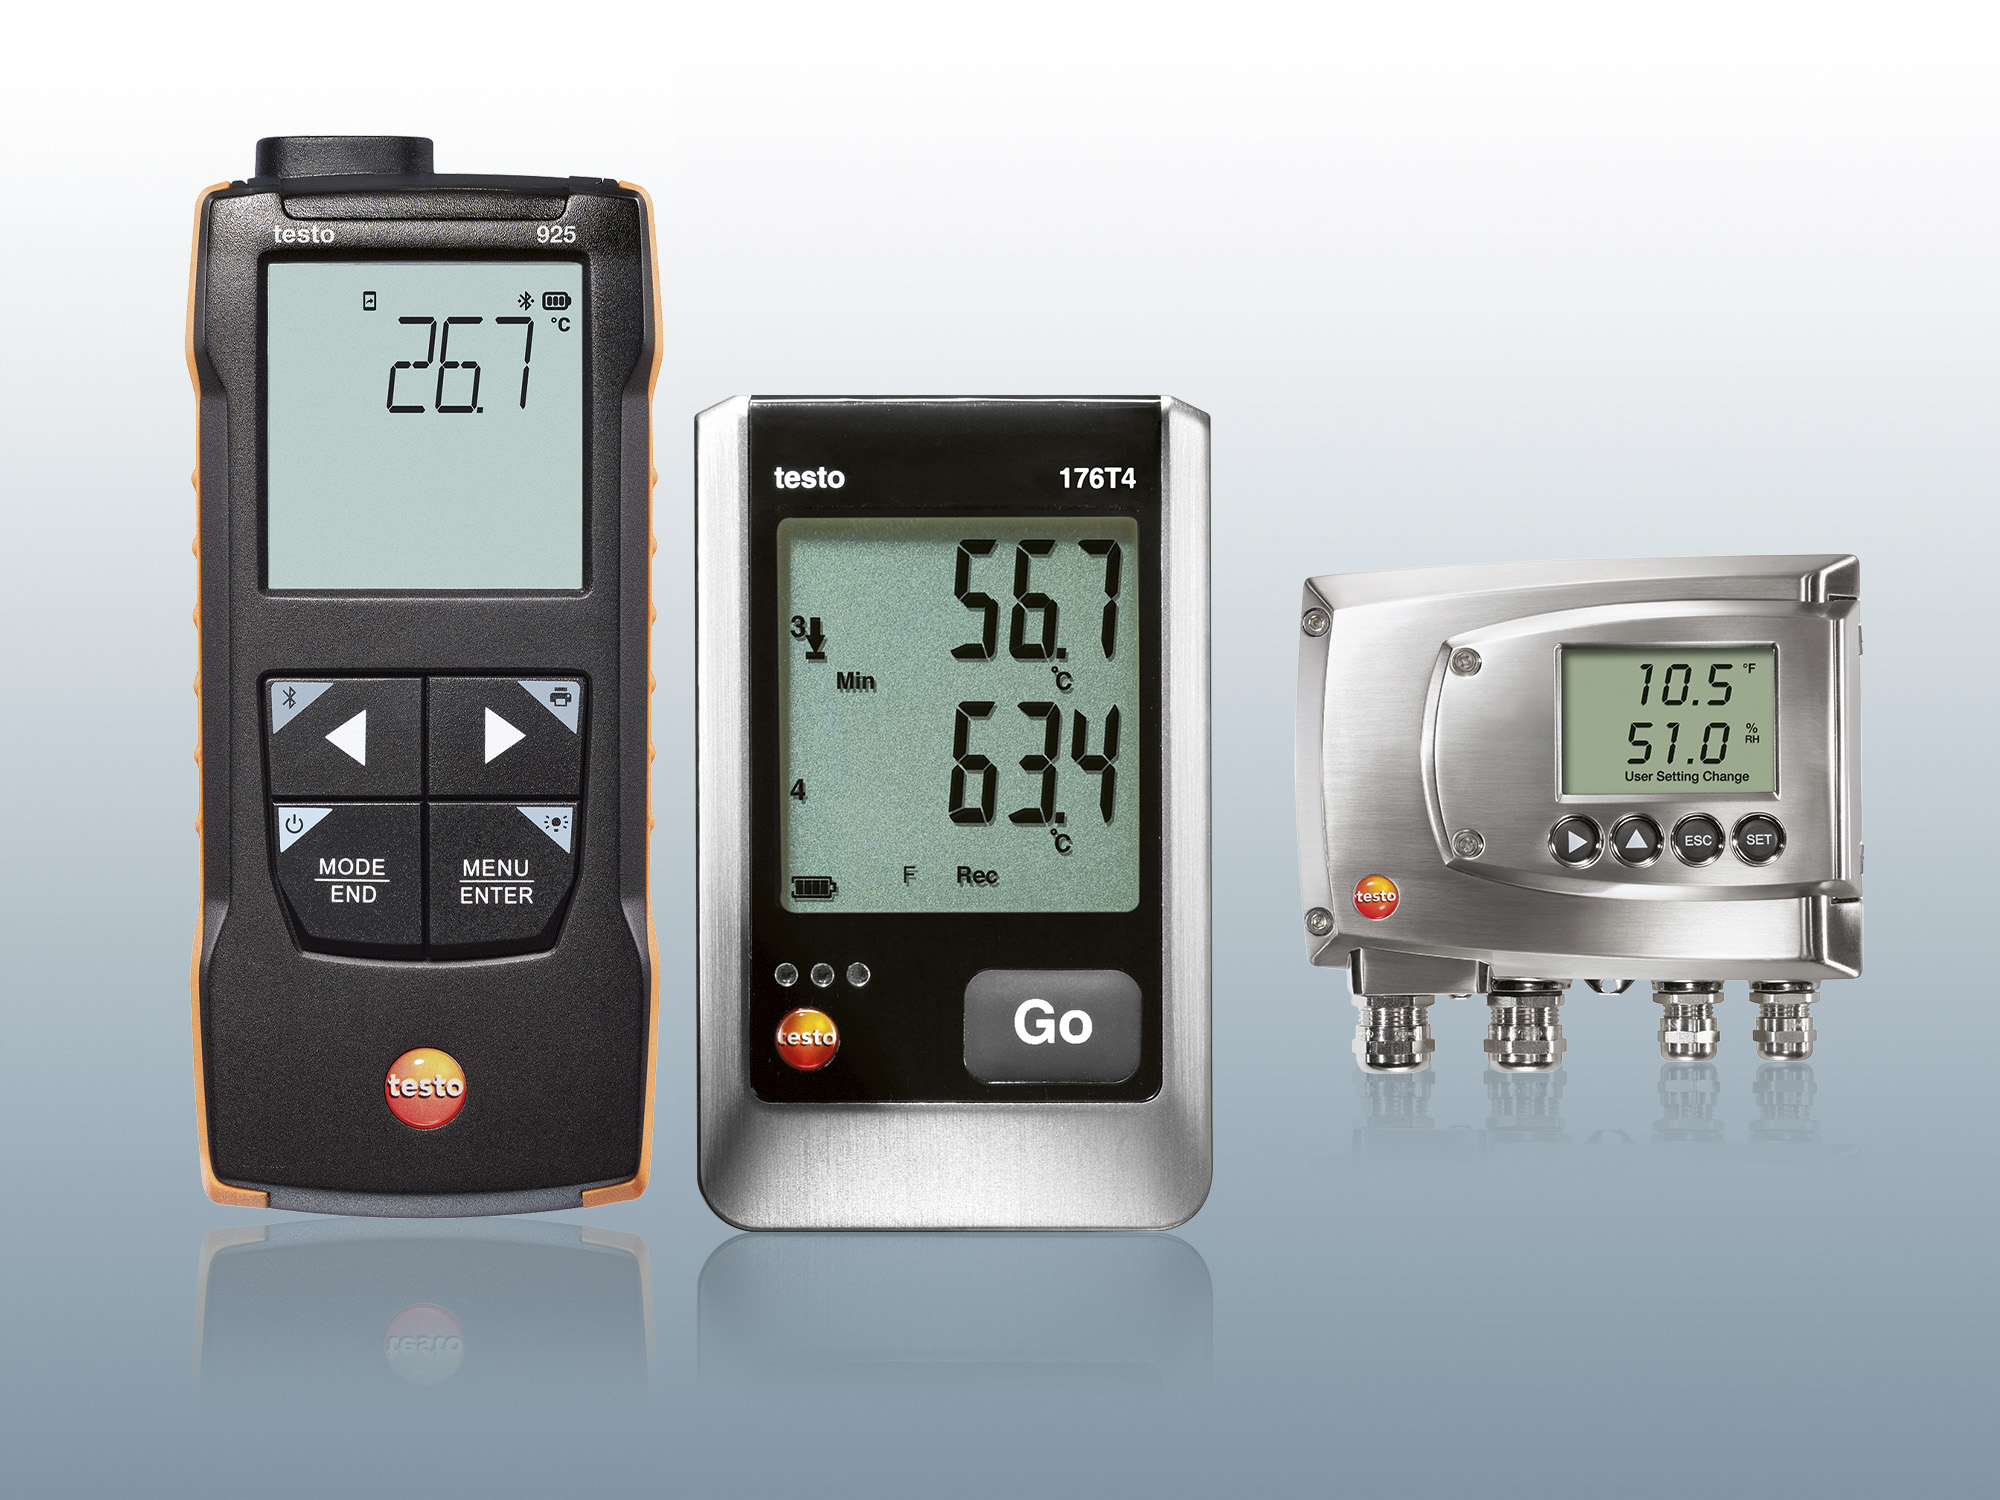 Temperature measurement sites and devices